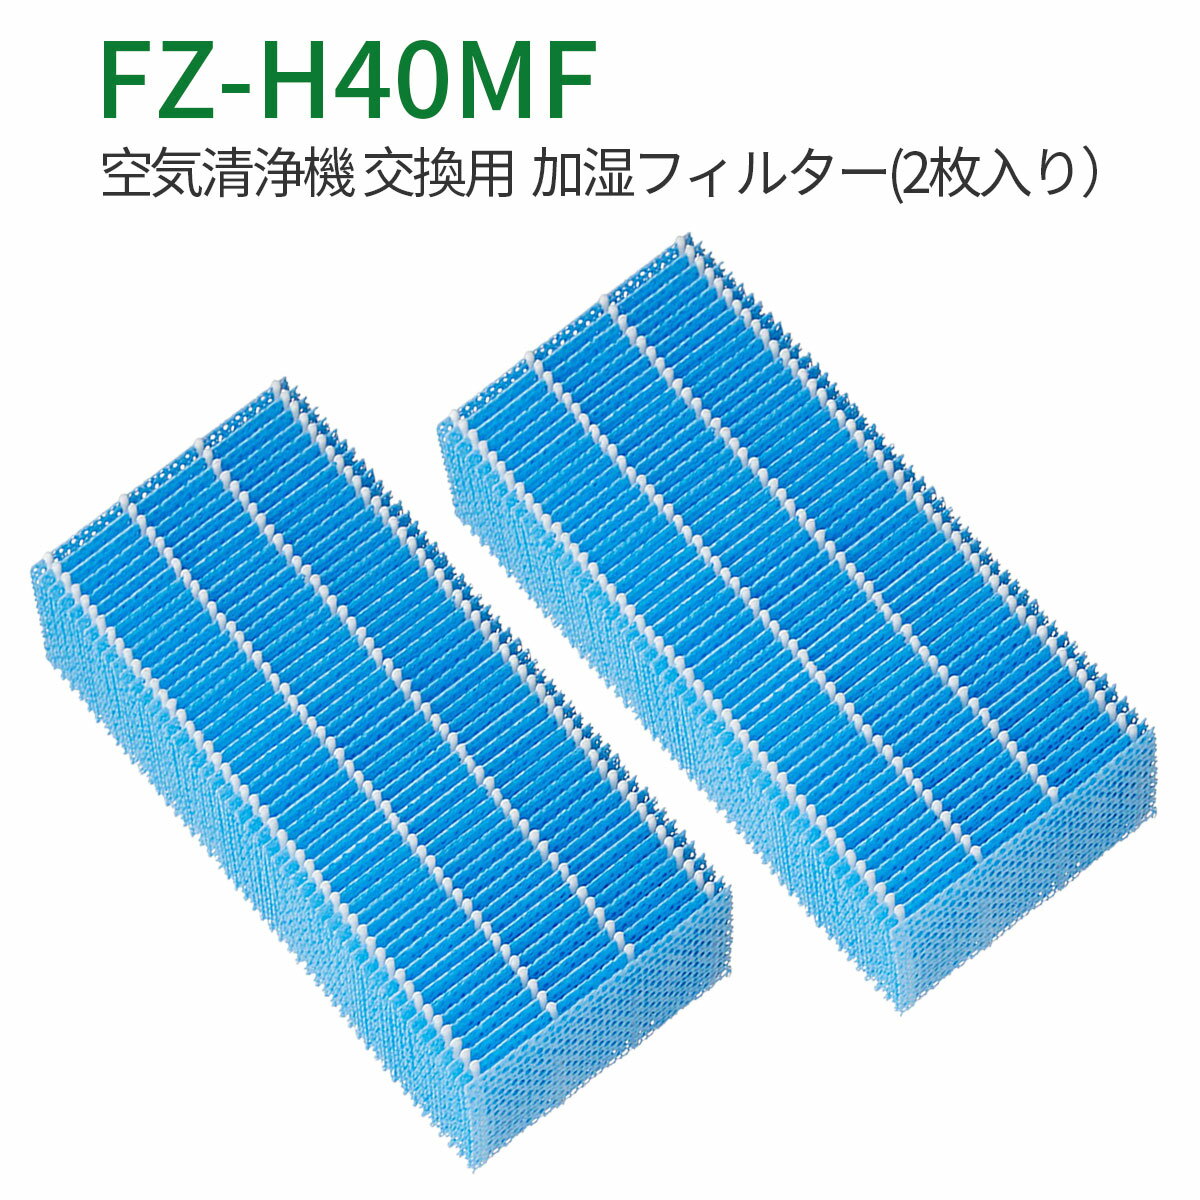 FZ-H40MF 加湿フィルター fz-h40mf シャープ 加湿空気清浄機 フィルター KI-HS40 KI-JS40 KI-LD50 KI-LS40 KI-ND50 KI-NS40 交換用フィルター (互換品/2枚入り)